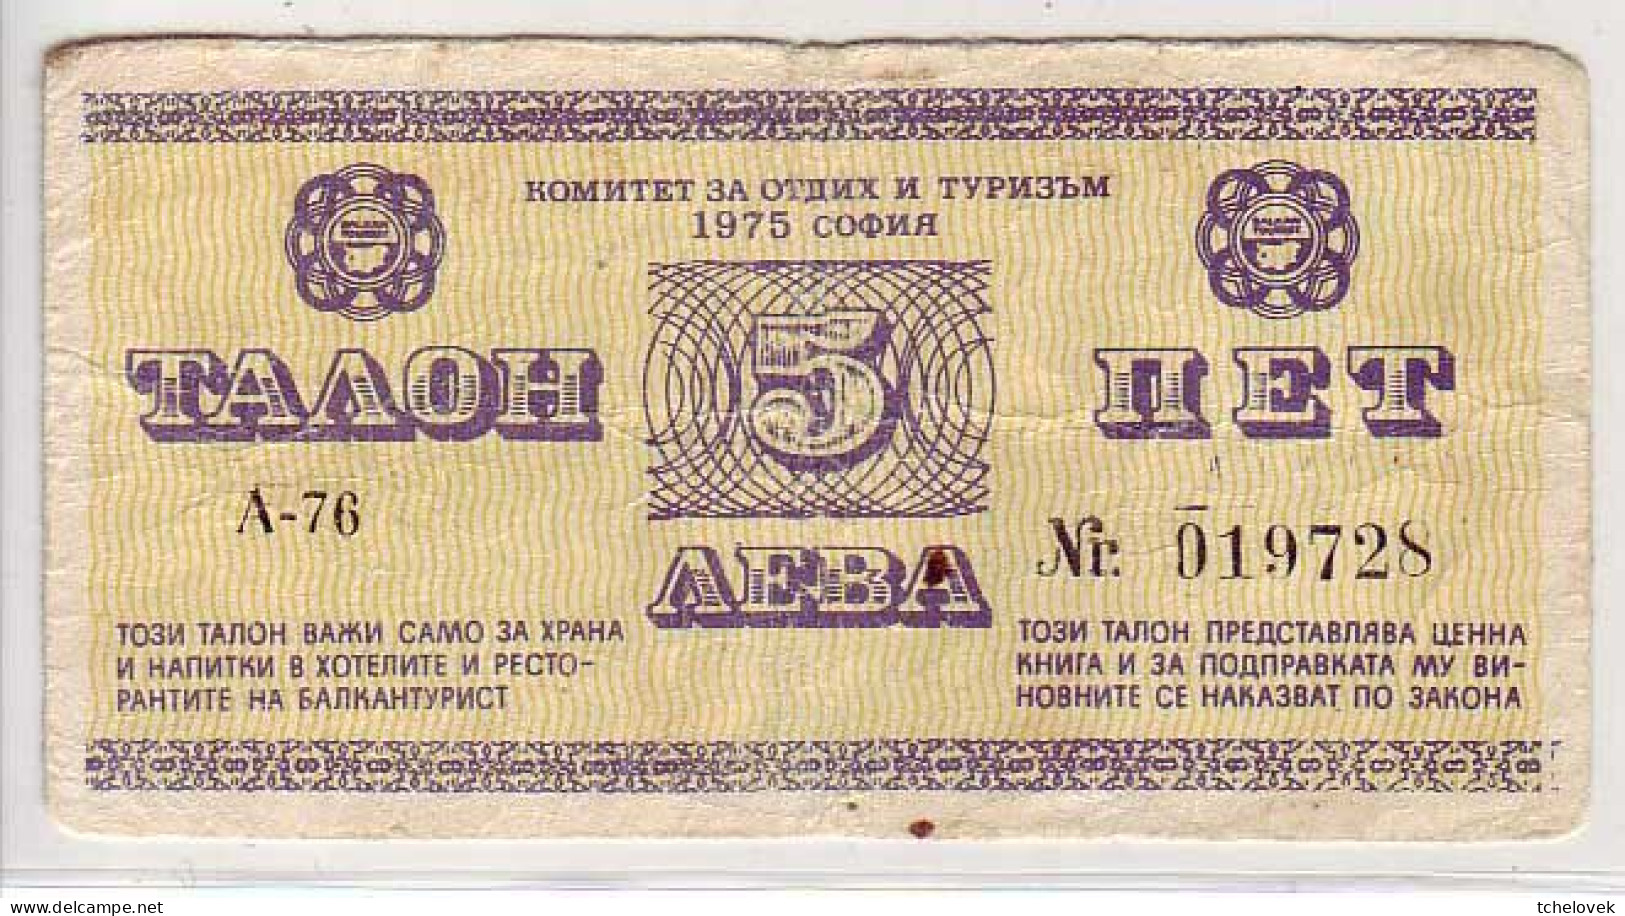 (Billets). Bulgarie Bulgaria. Foreing Exchange Certificate. Rare. Balkan Tourist. 1975. 5 Leva Serie A-76 N° 019728 - Bulgaria